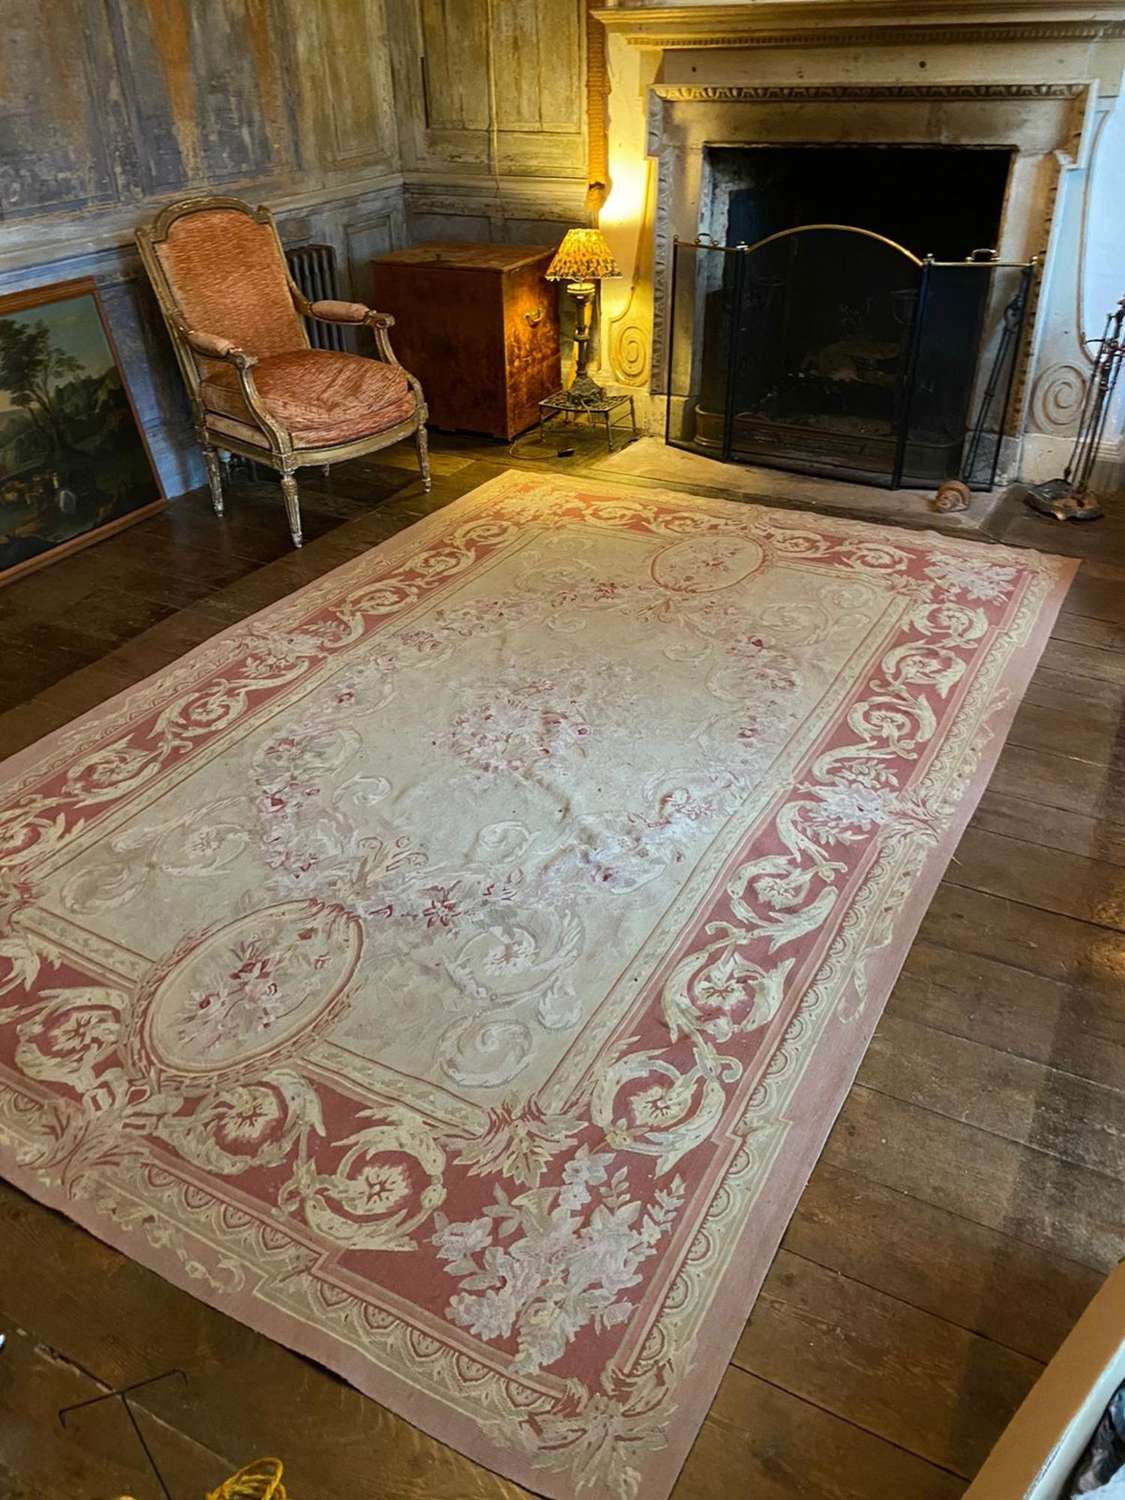 A beautiful French carpet